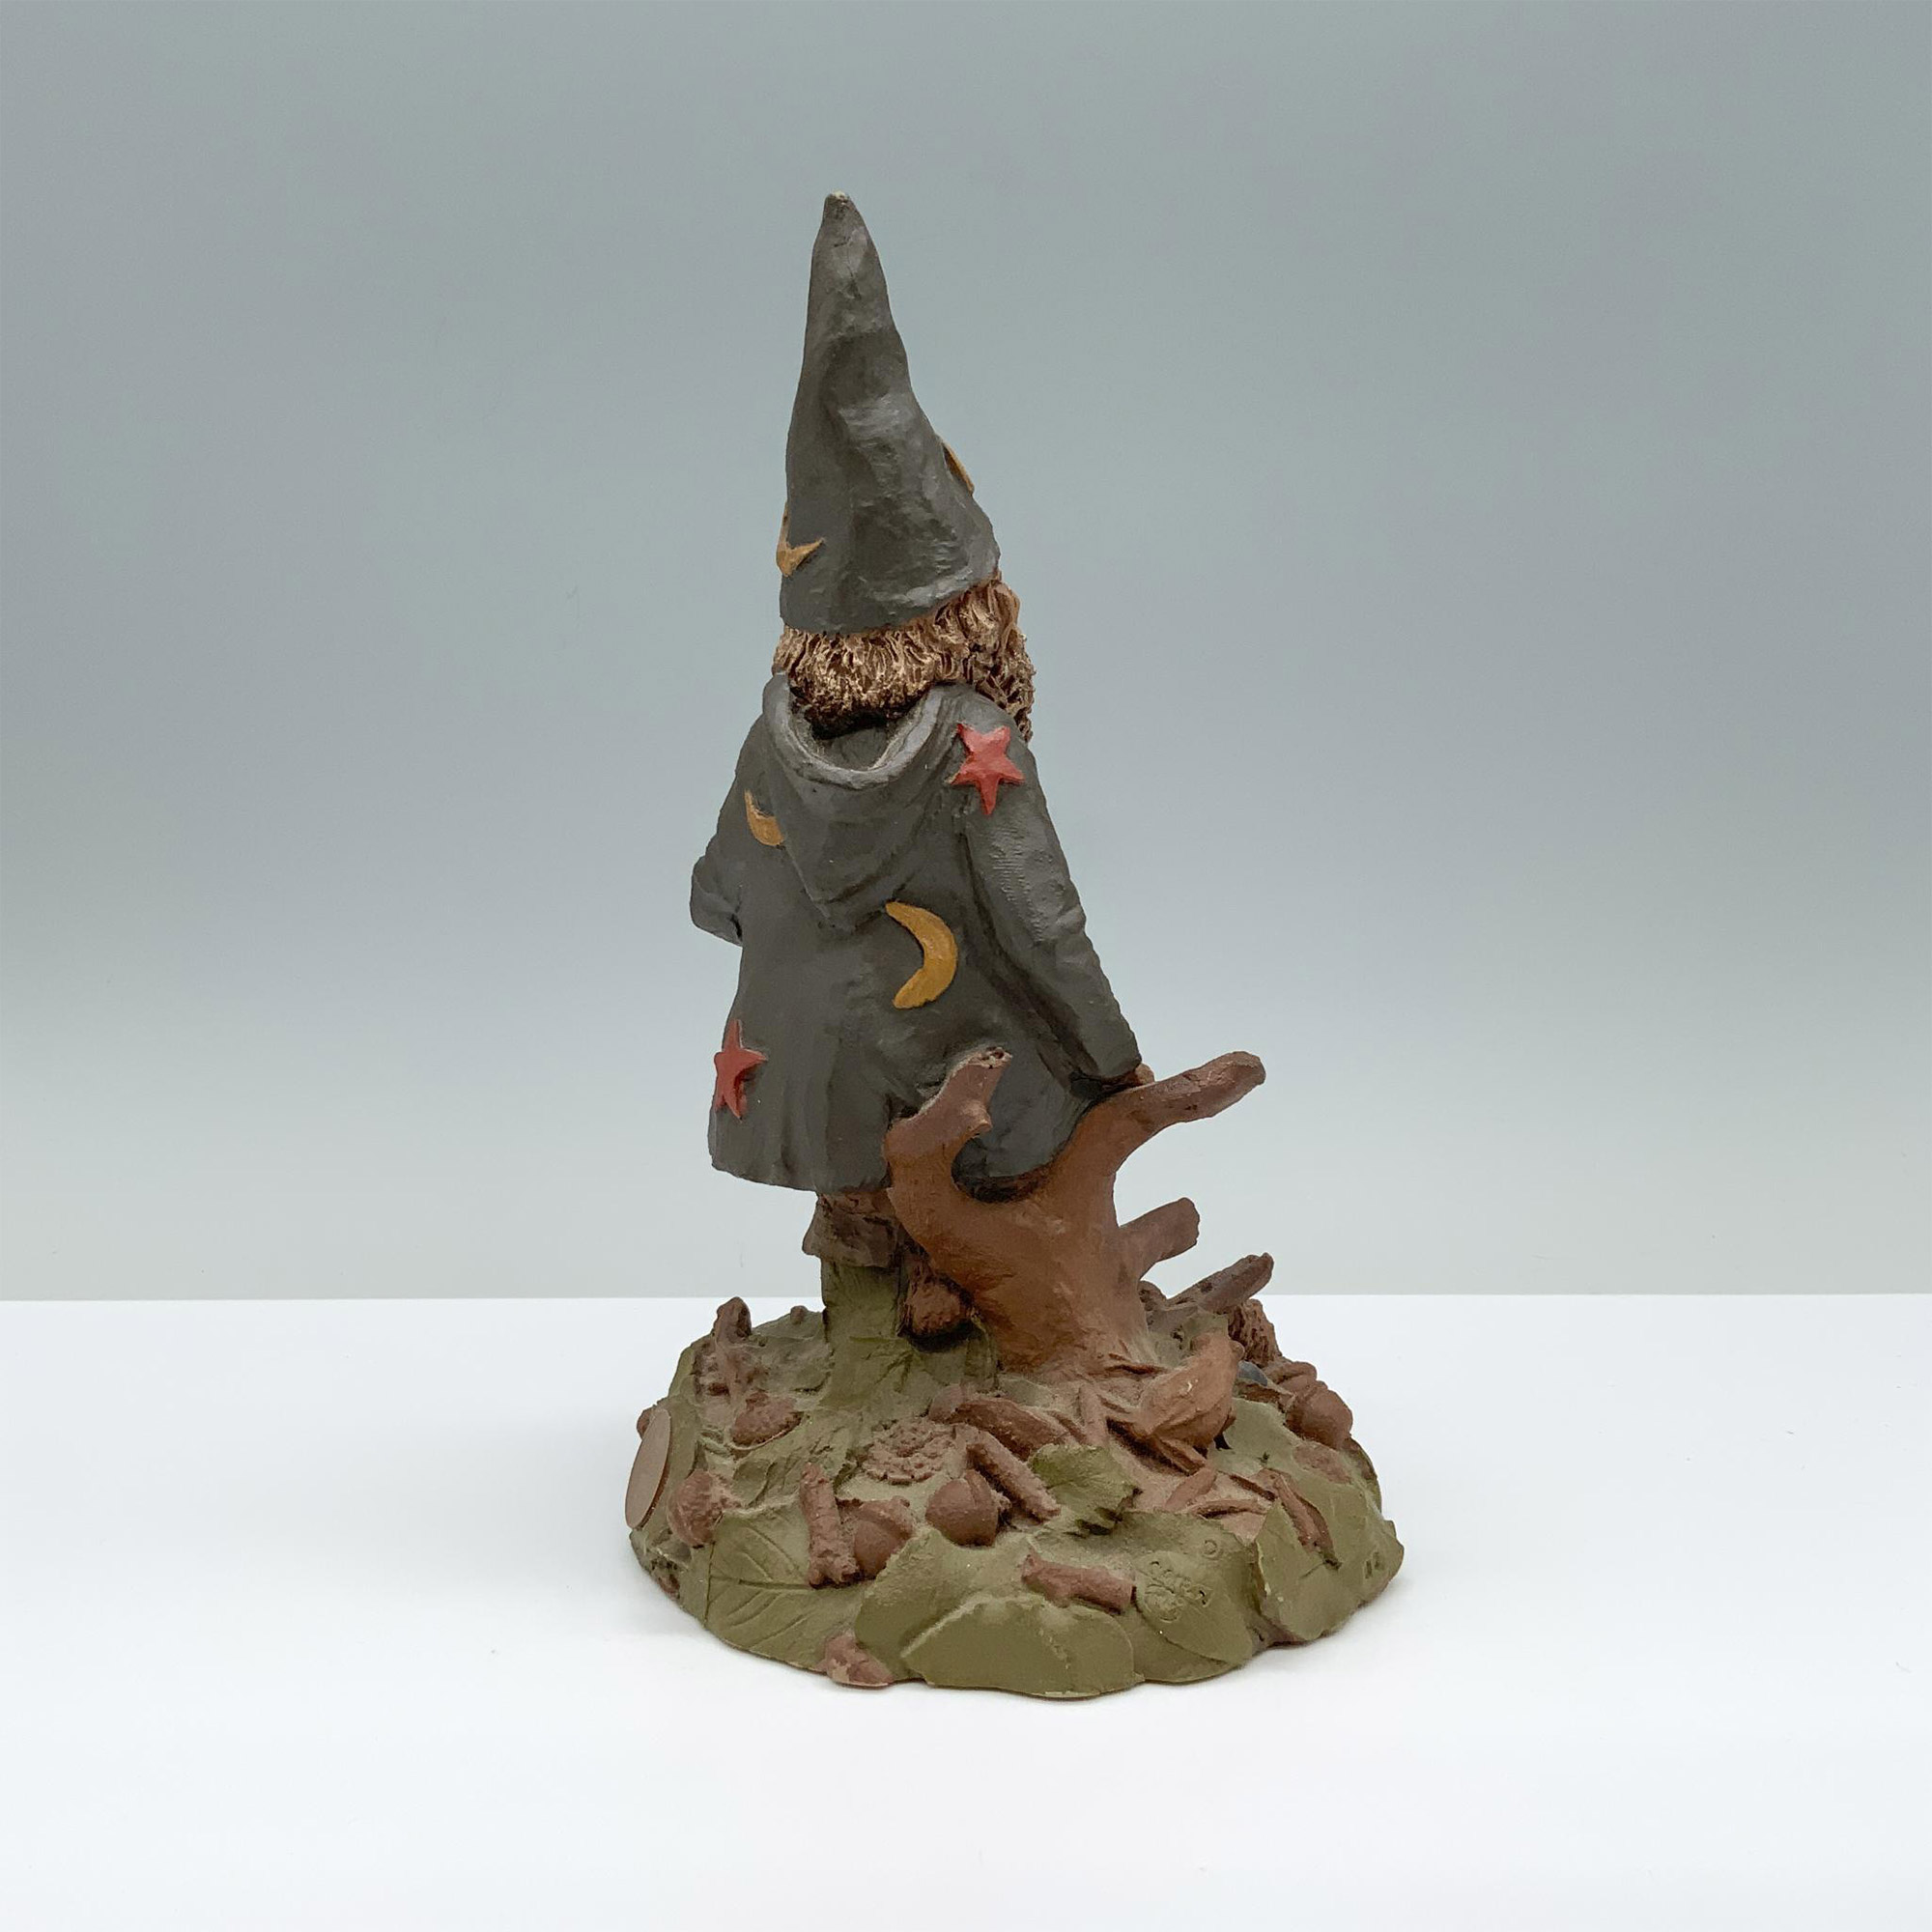 Carin Studios Tom Clark Garden Gnome, The Wiz - Image 2 of 3